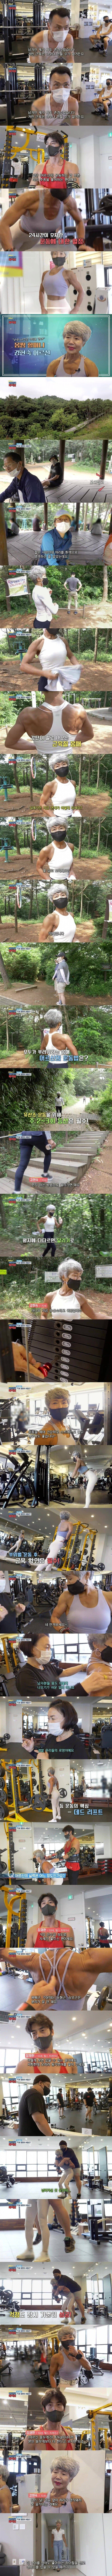 image.png 싱글벙글 운동하는 할머니 몸매